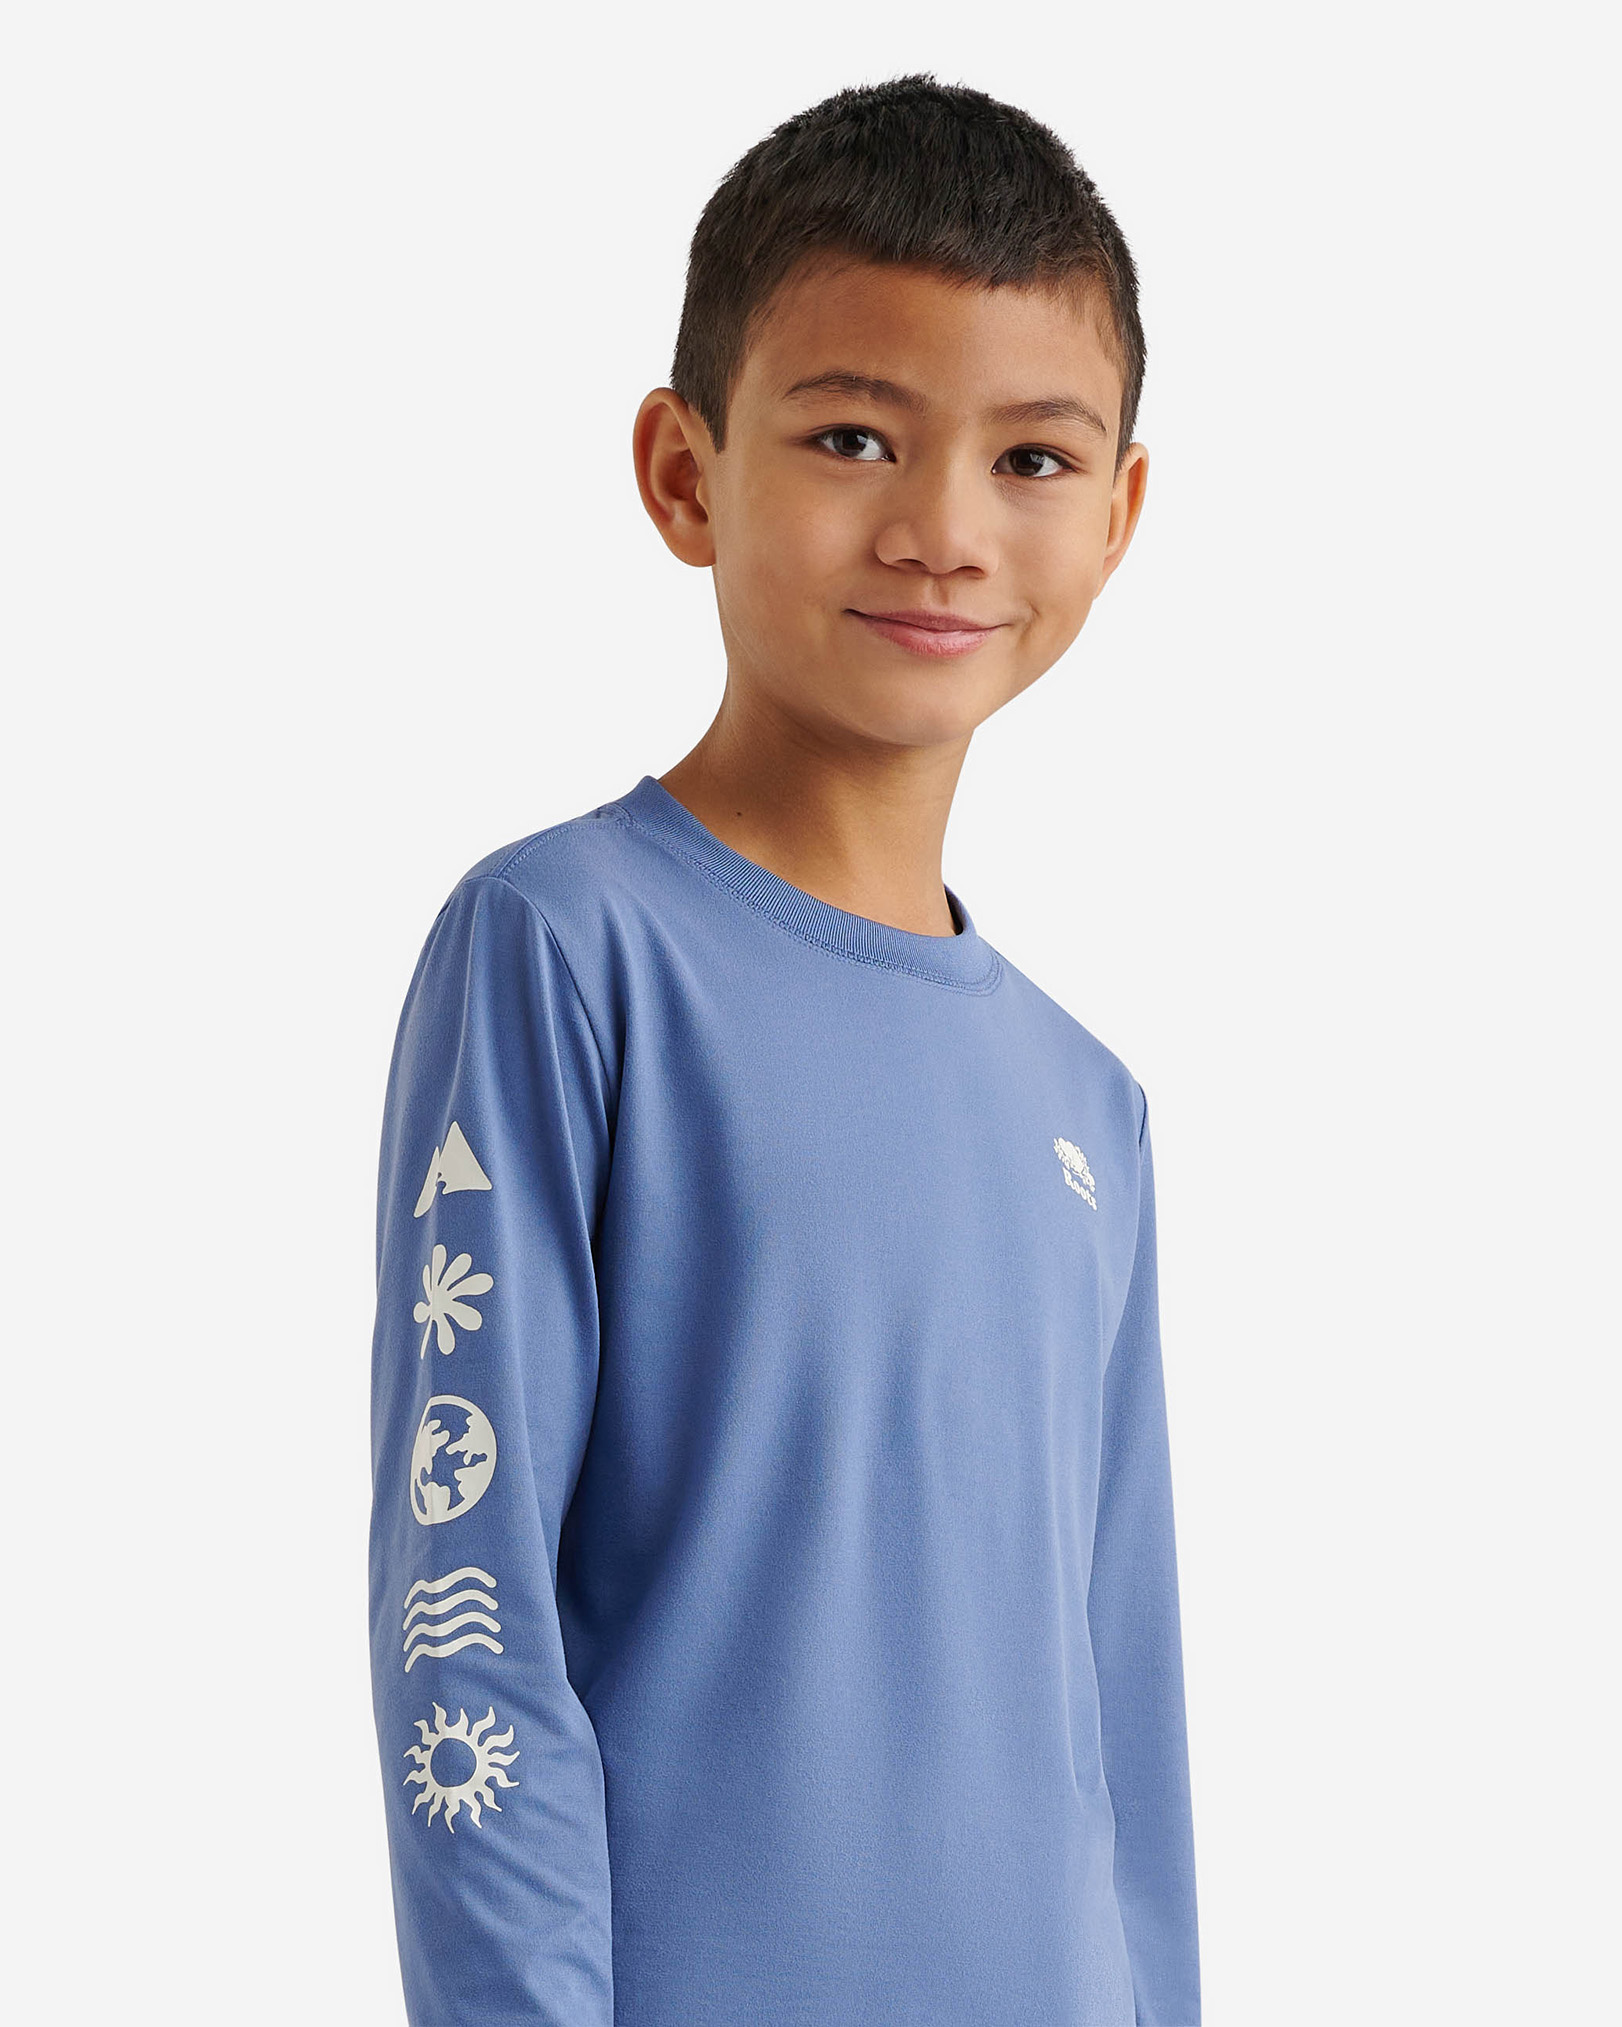 Roots Kids Active Symbols T-Shirt in Blue Horizon